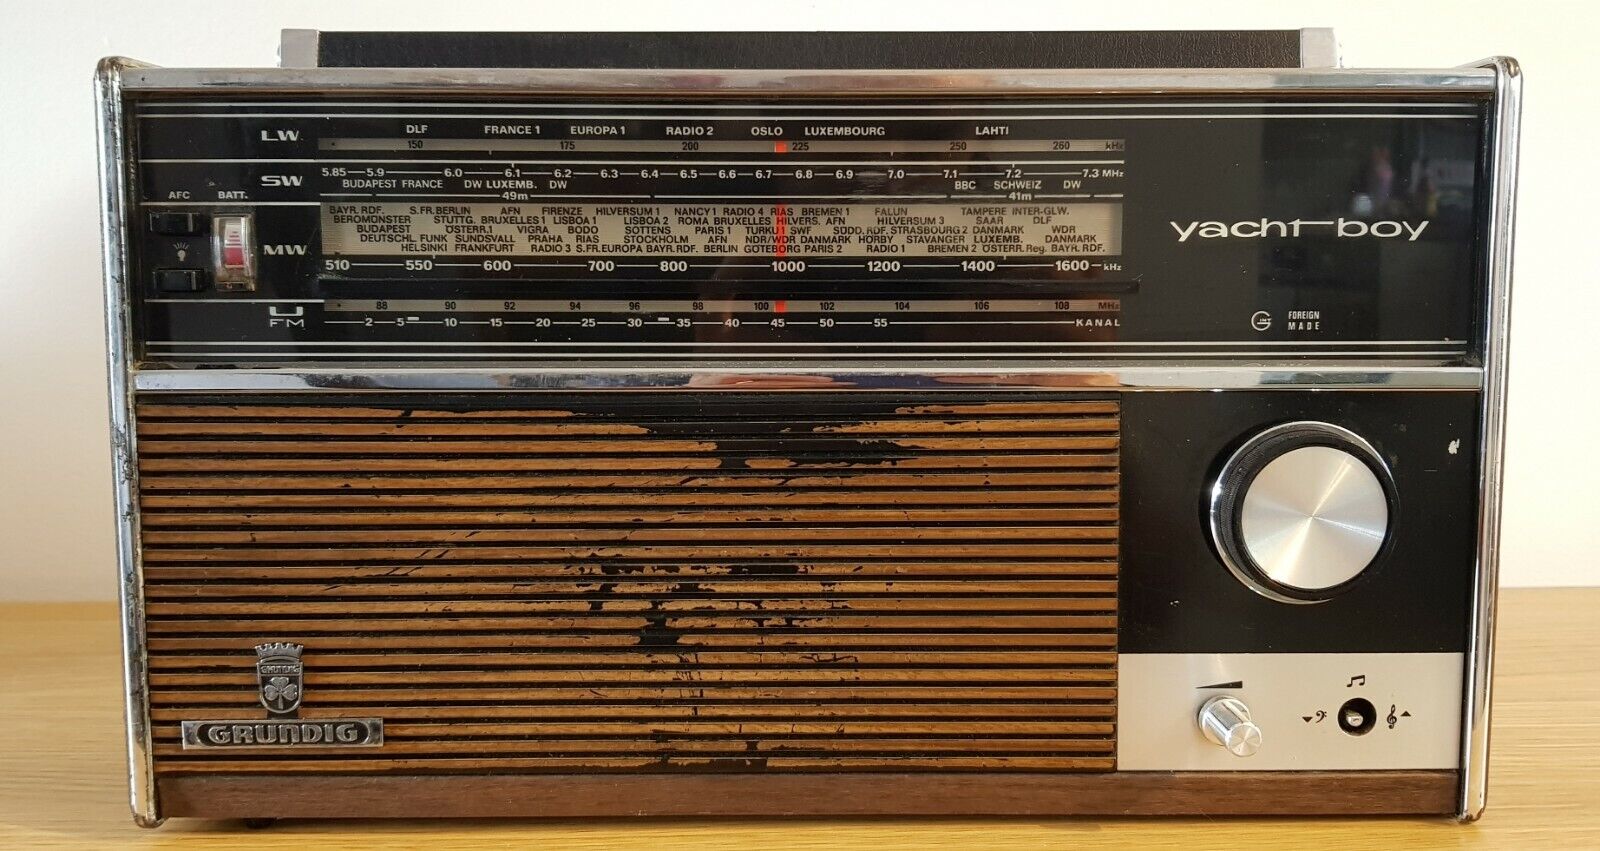 Circa 1960-70 Grundig Yacht Boy Transistor Radio Vintage Original Working 